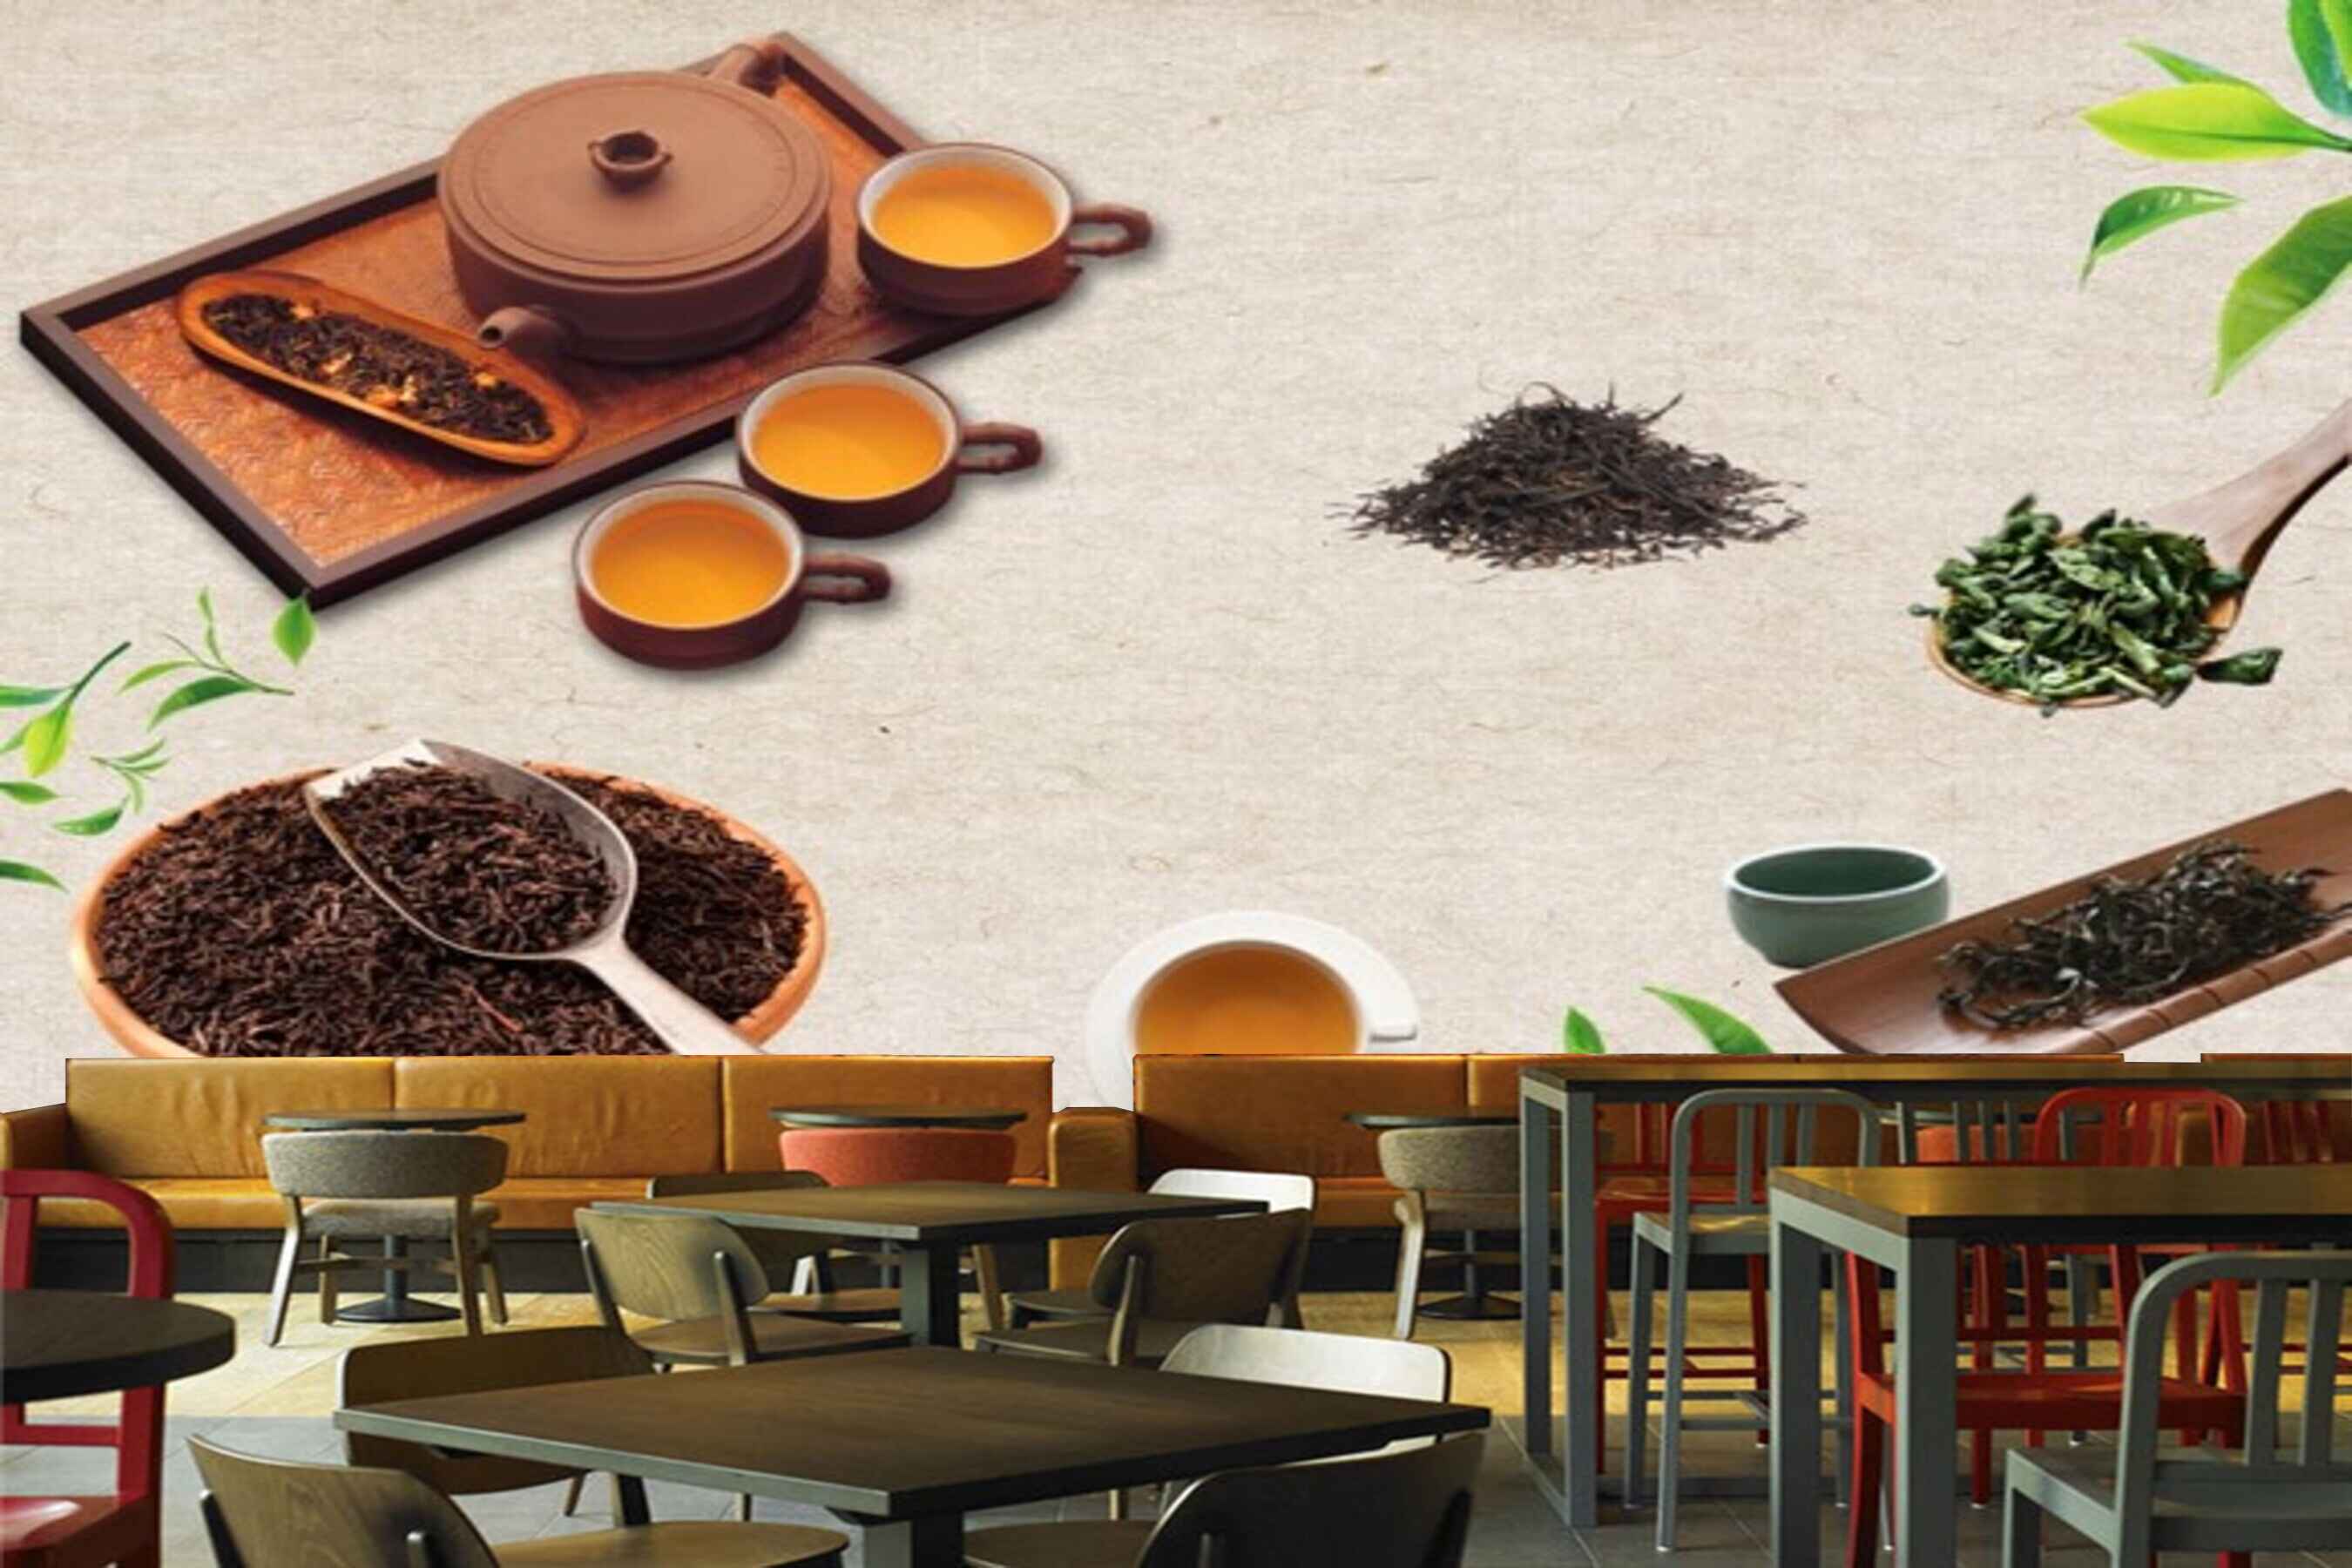 Avikalp MWZ3108 Tea Leaves Cups Mug HD Wallpaper for Cafe Restaurant